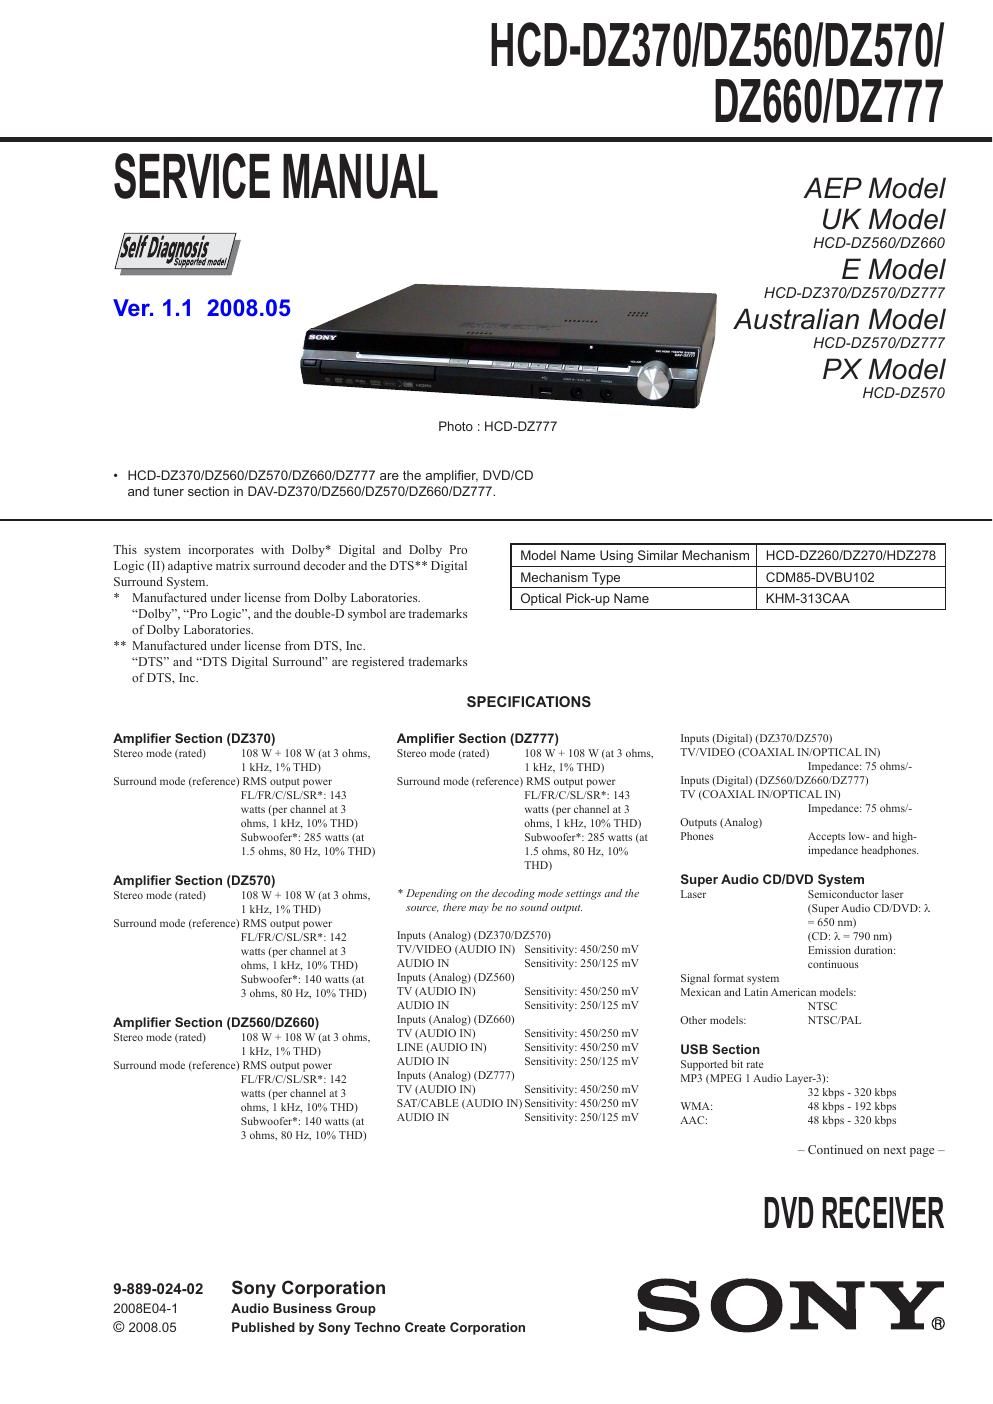 sony hcd dz 370 560 570 660 777 ver 1 1 2008 05 dvd receiver service manual